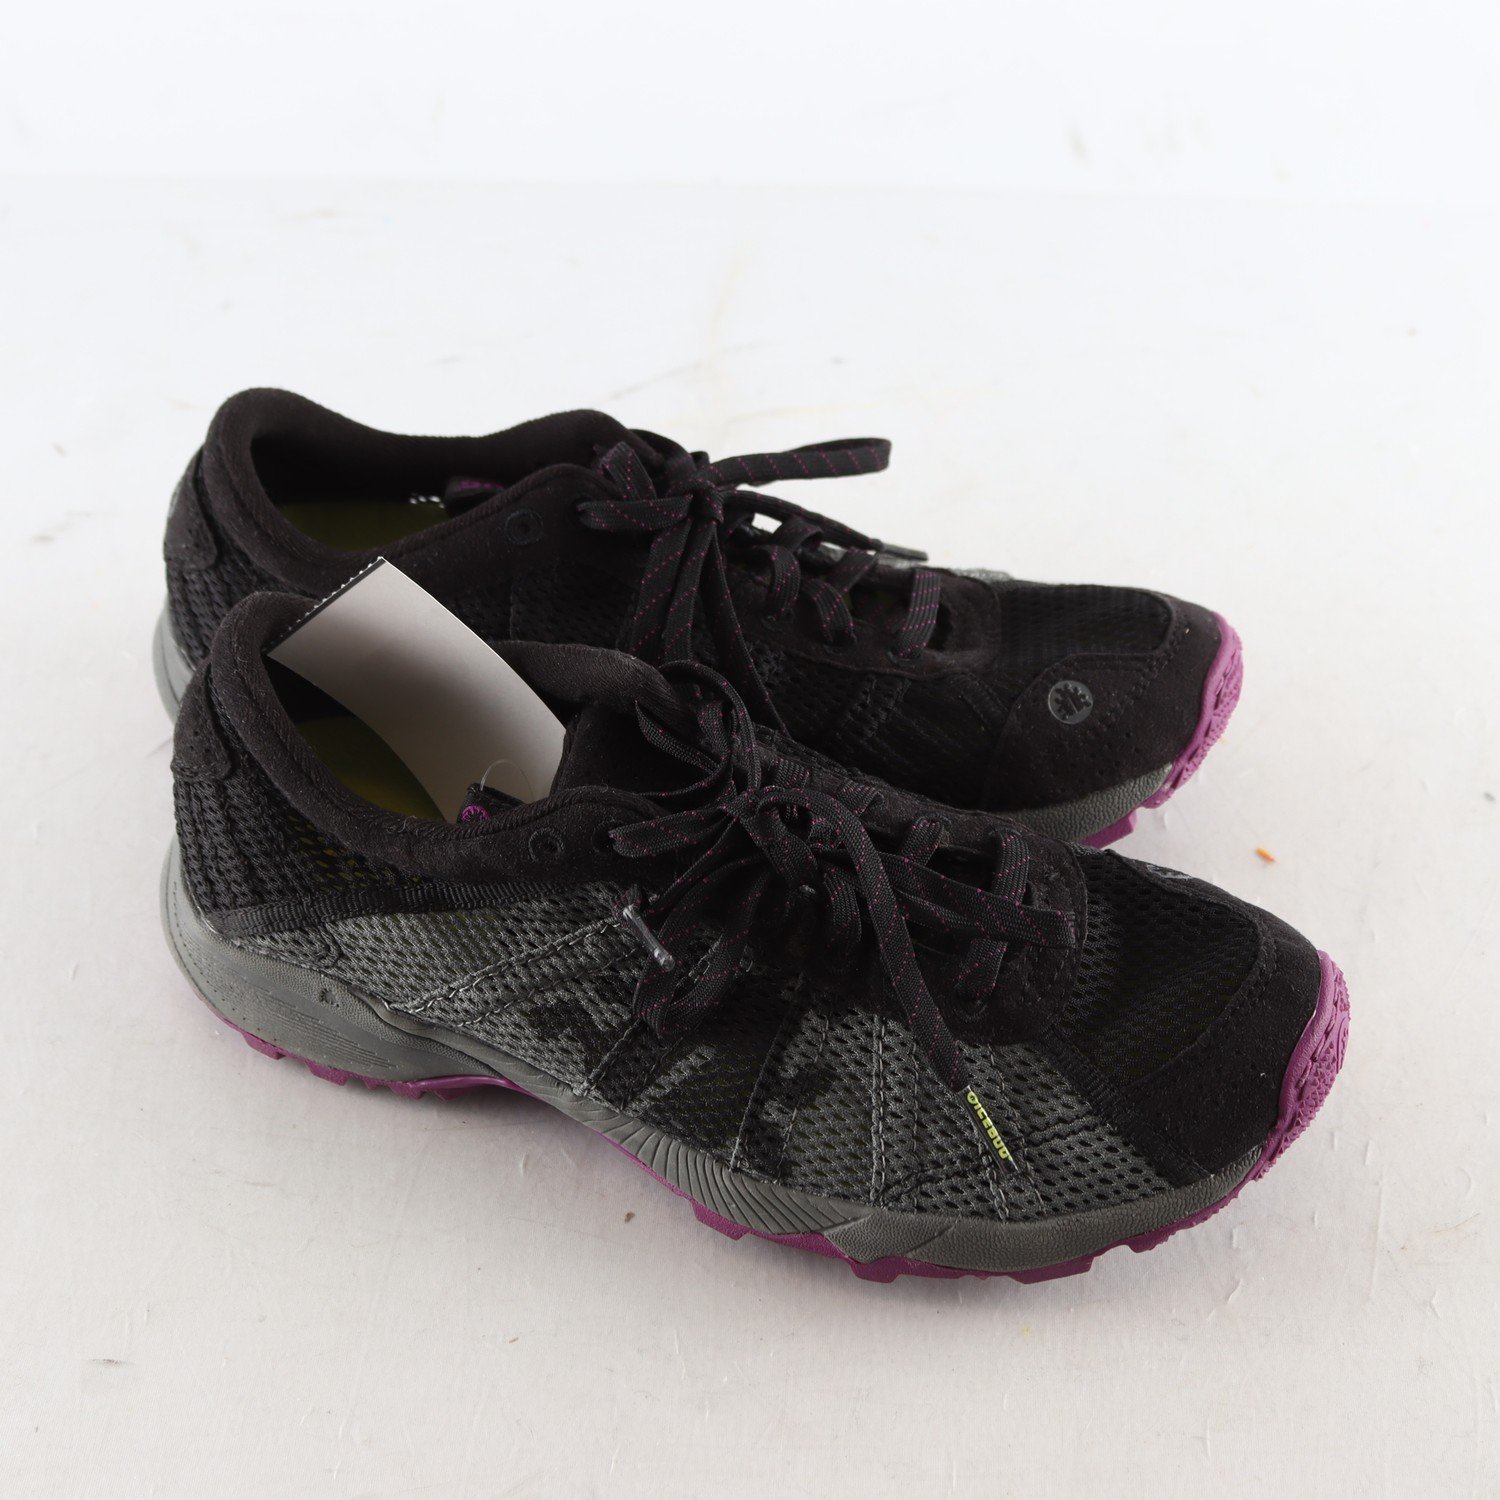 Sneakers, Icebug, grå/svart, stl. 38